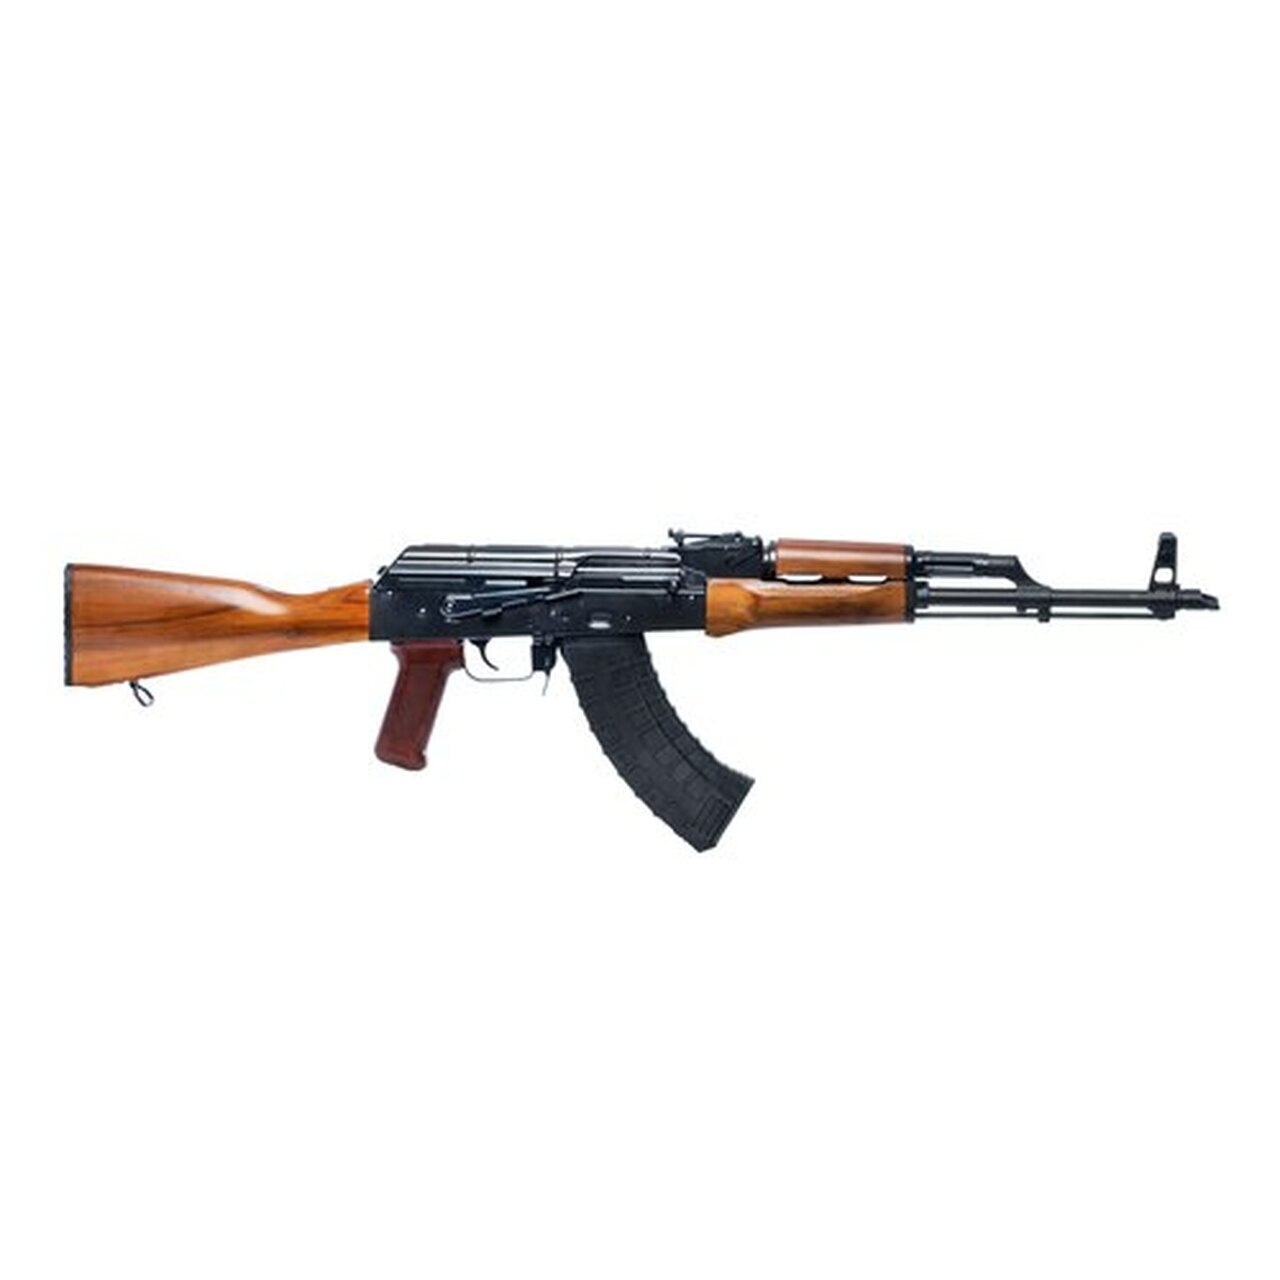 Image of Riley Defense RAK47 AK, 7.62X39, 16" Barrel, Black, Teak Wood Stock, Adjustable Sights, 30Rd, 1 Magazine